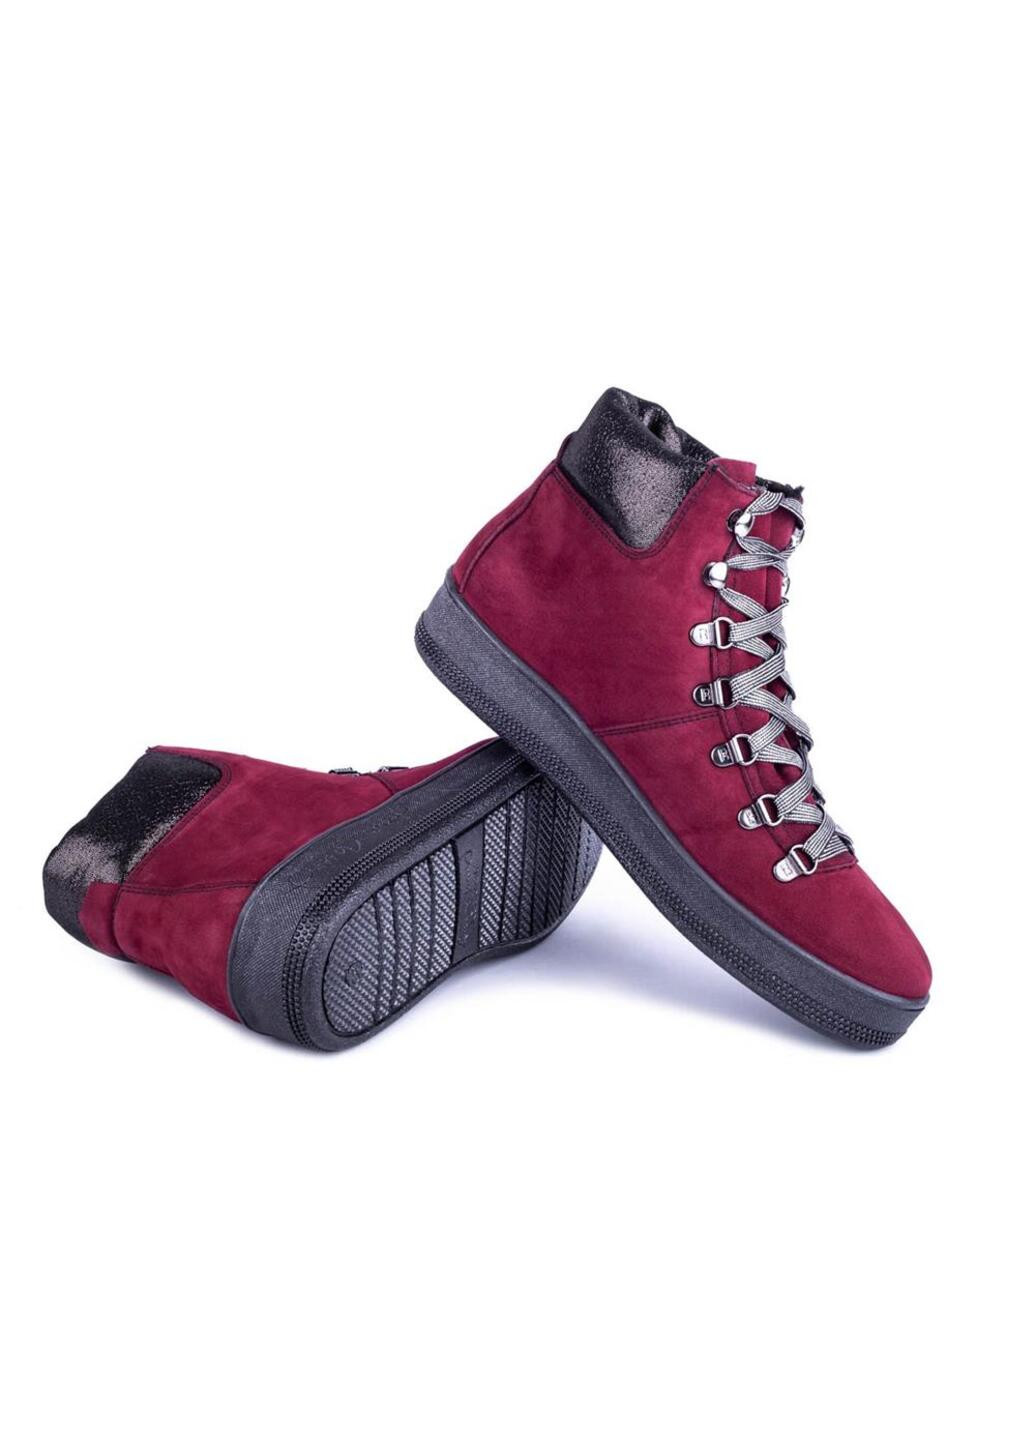 Зимние ботинки женские бренда 8500772_(430ш) Mida